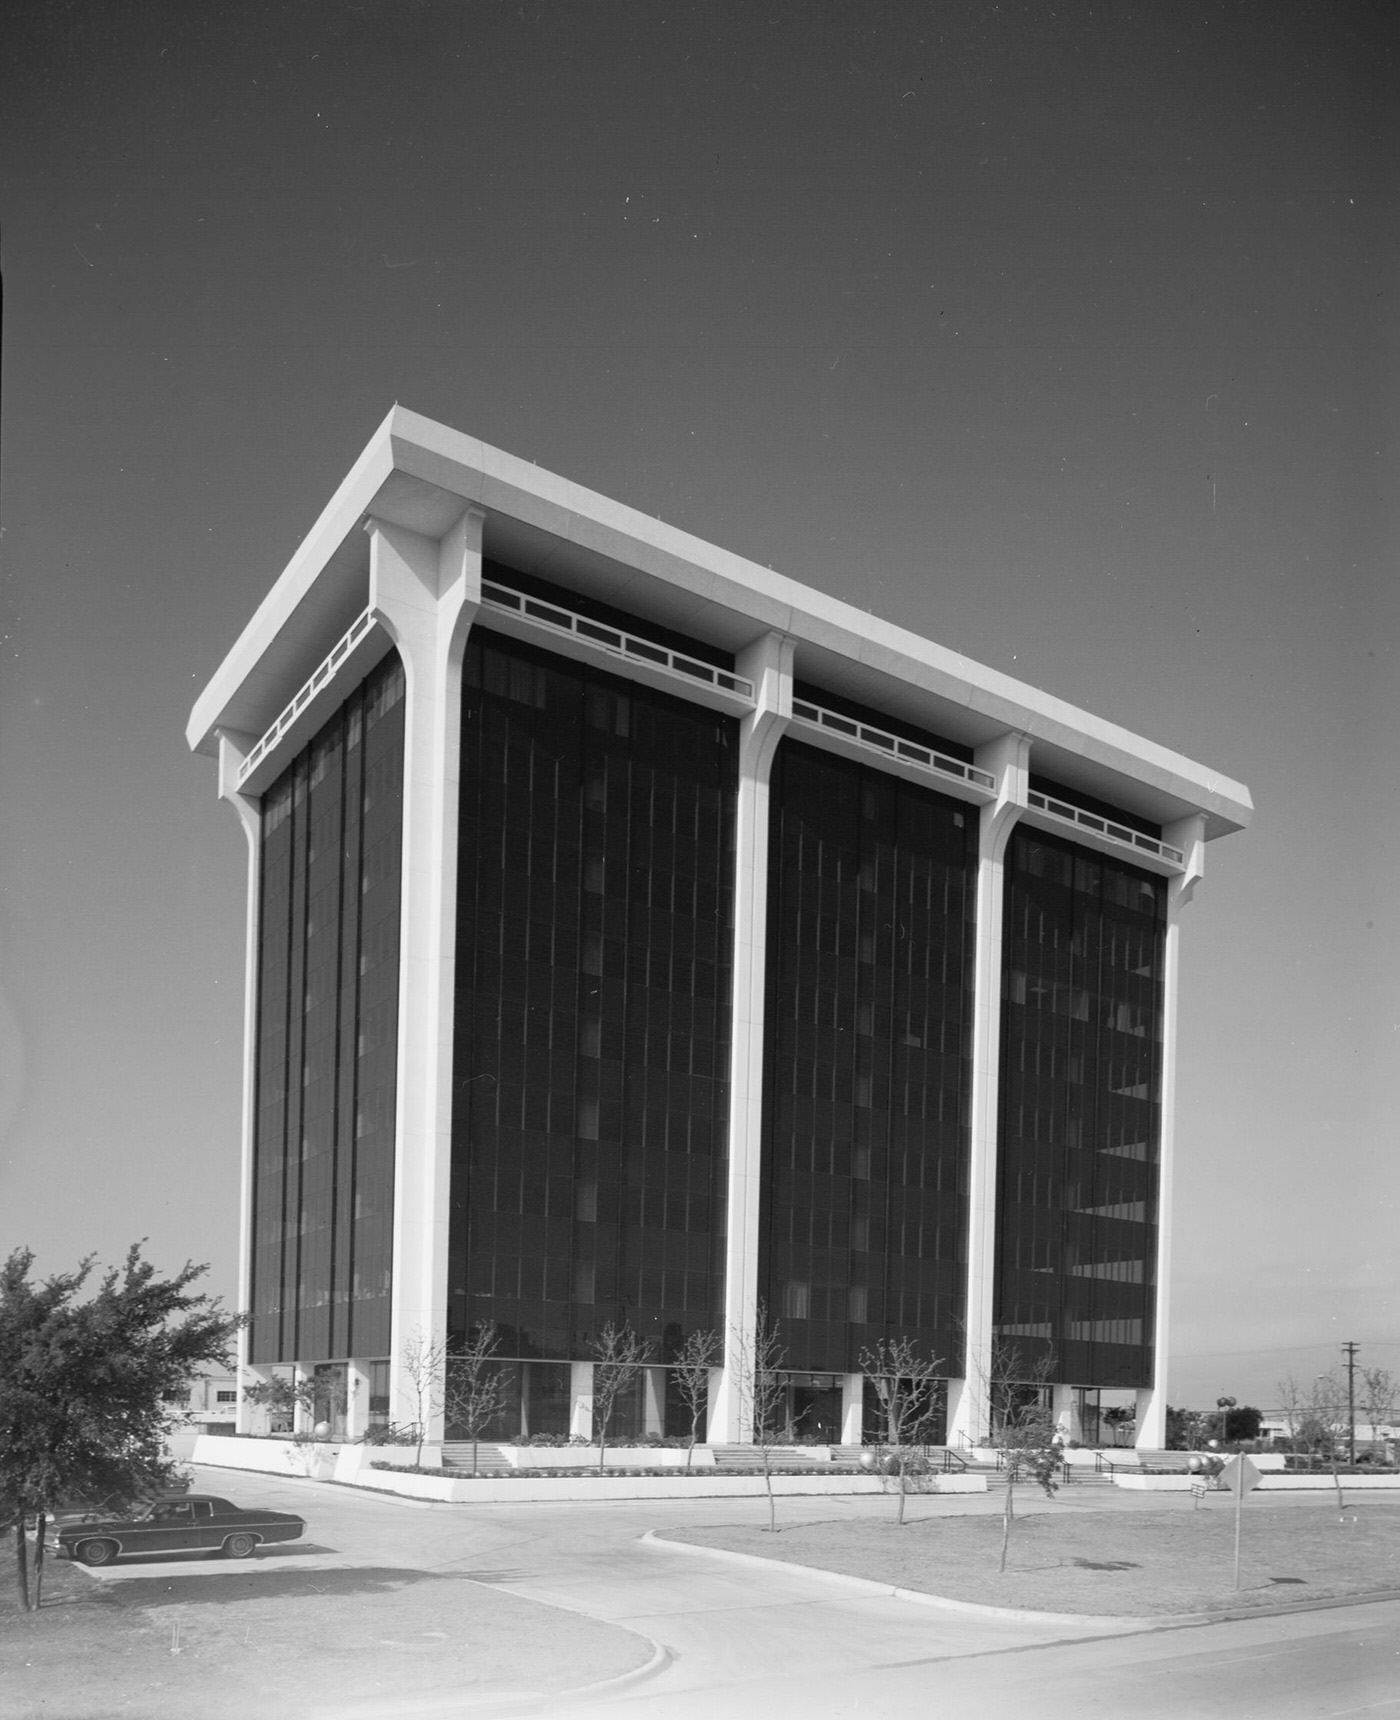 Office building on I-635 LBJ Freeway, Dallas, Texas, 1963